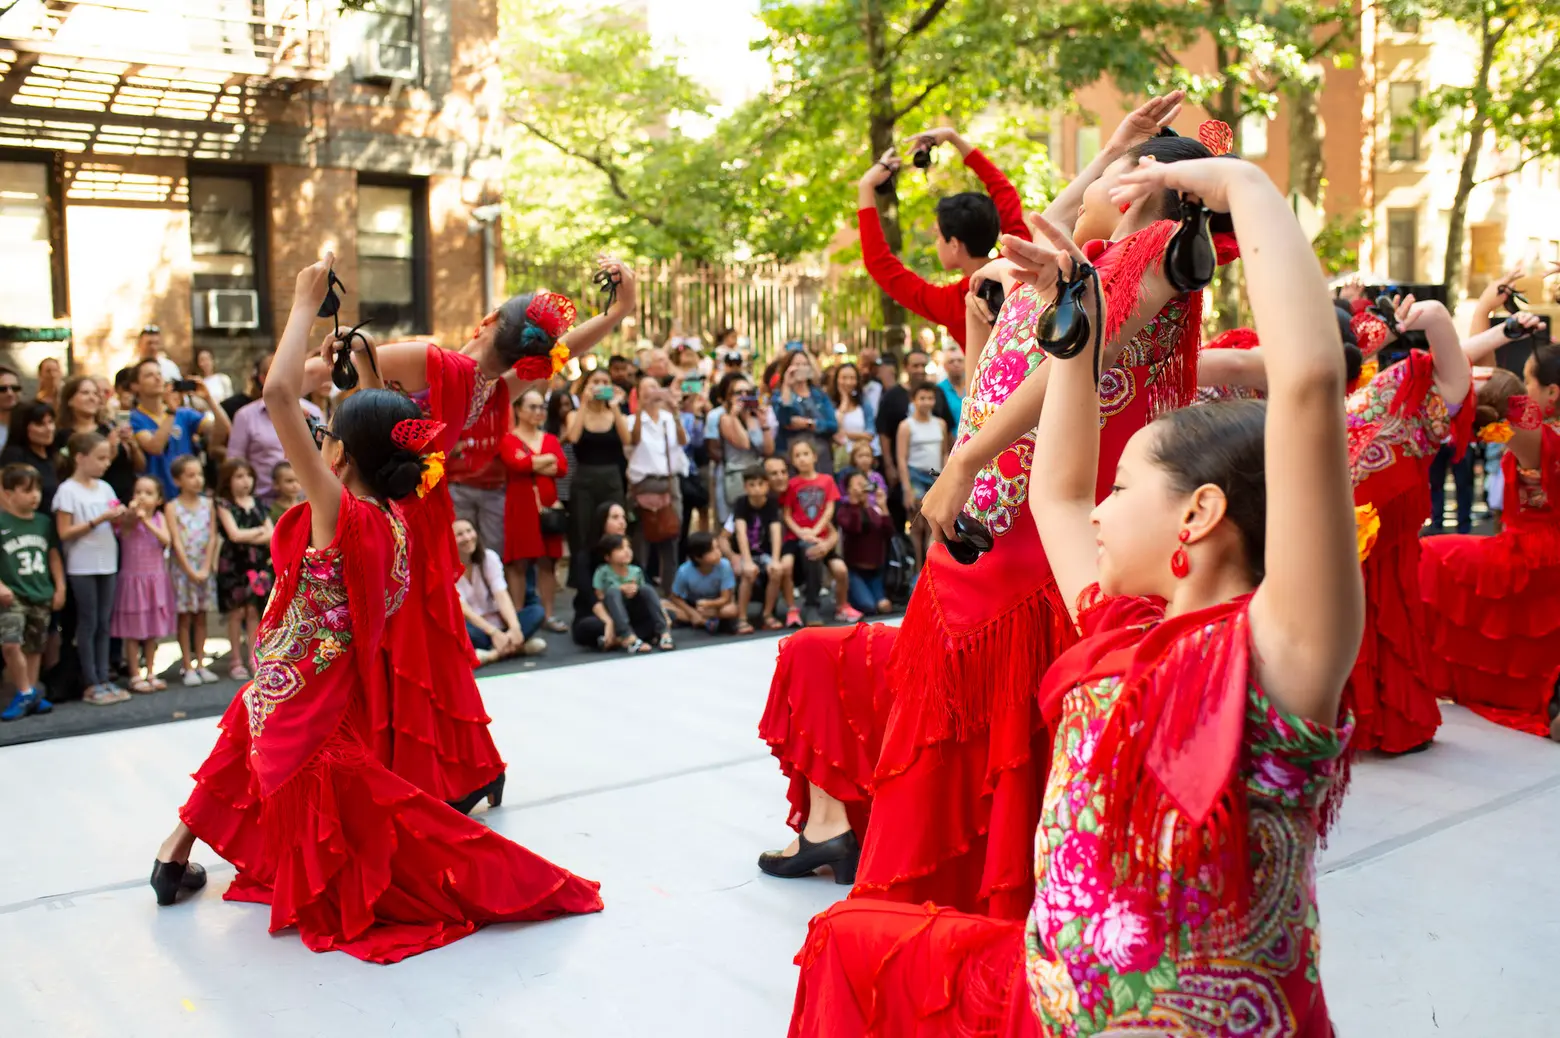 16 ways to mark Hispanic Heritage Month in NYC